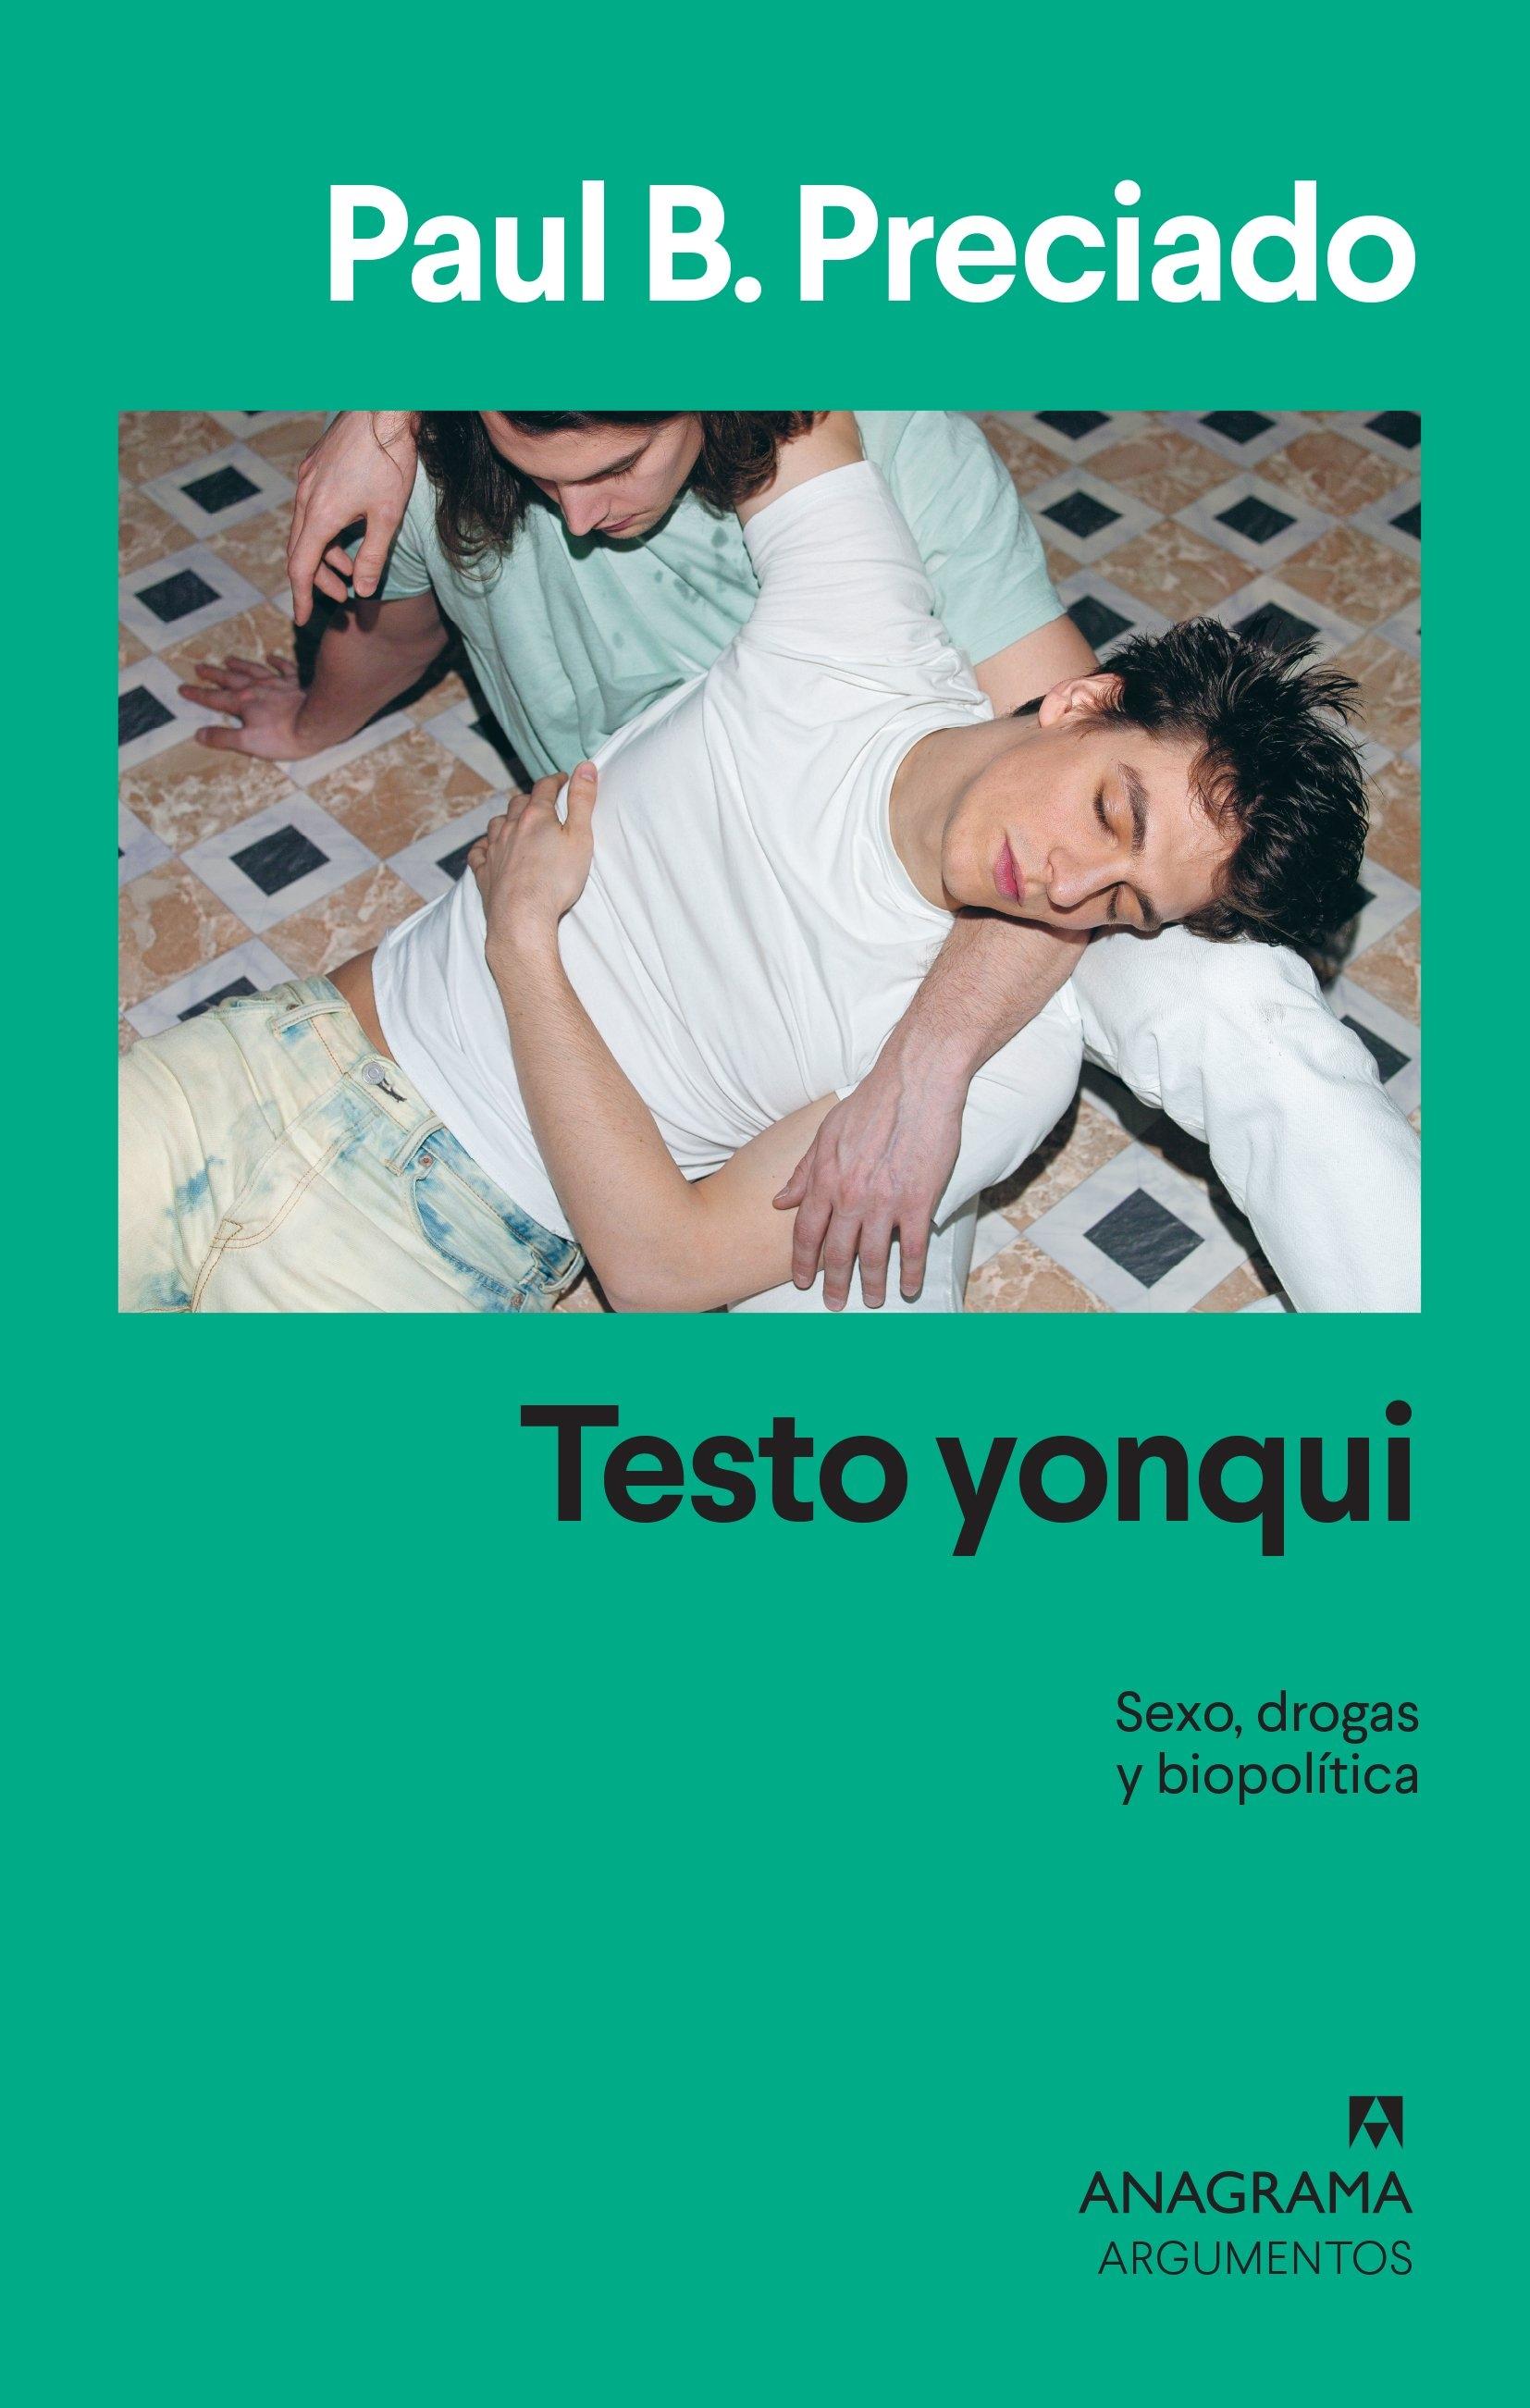 Testo yonqui "Sexo, drogas y biopolítica". 